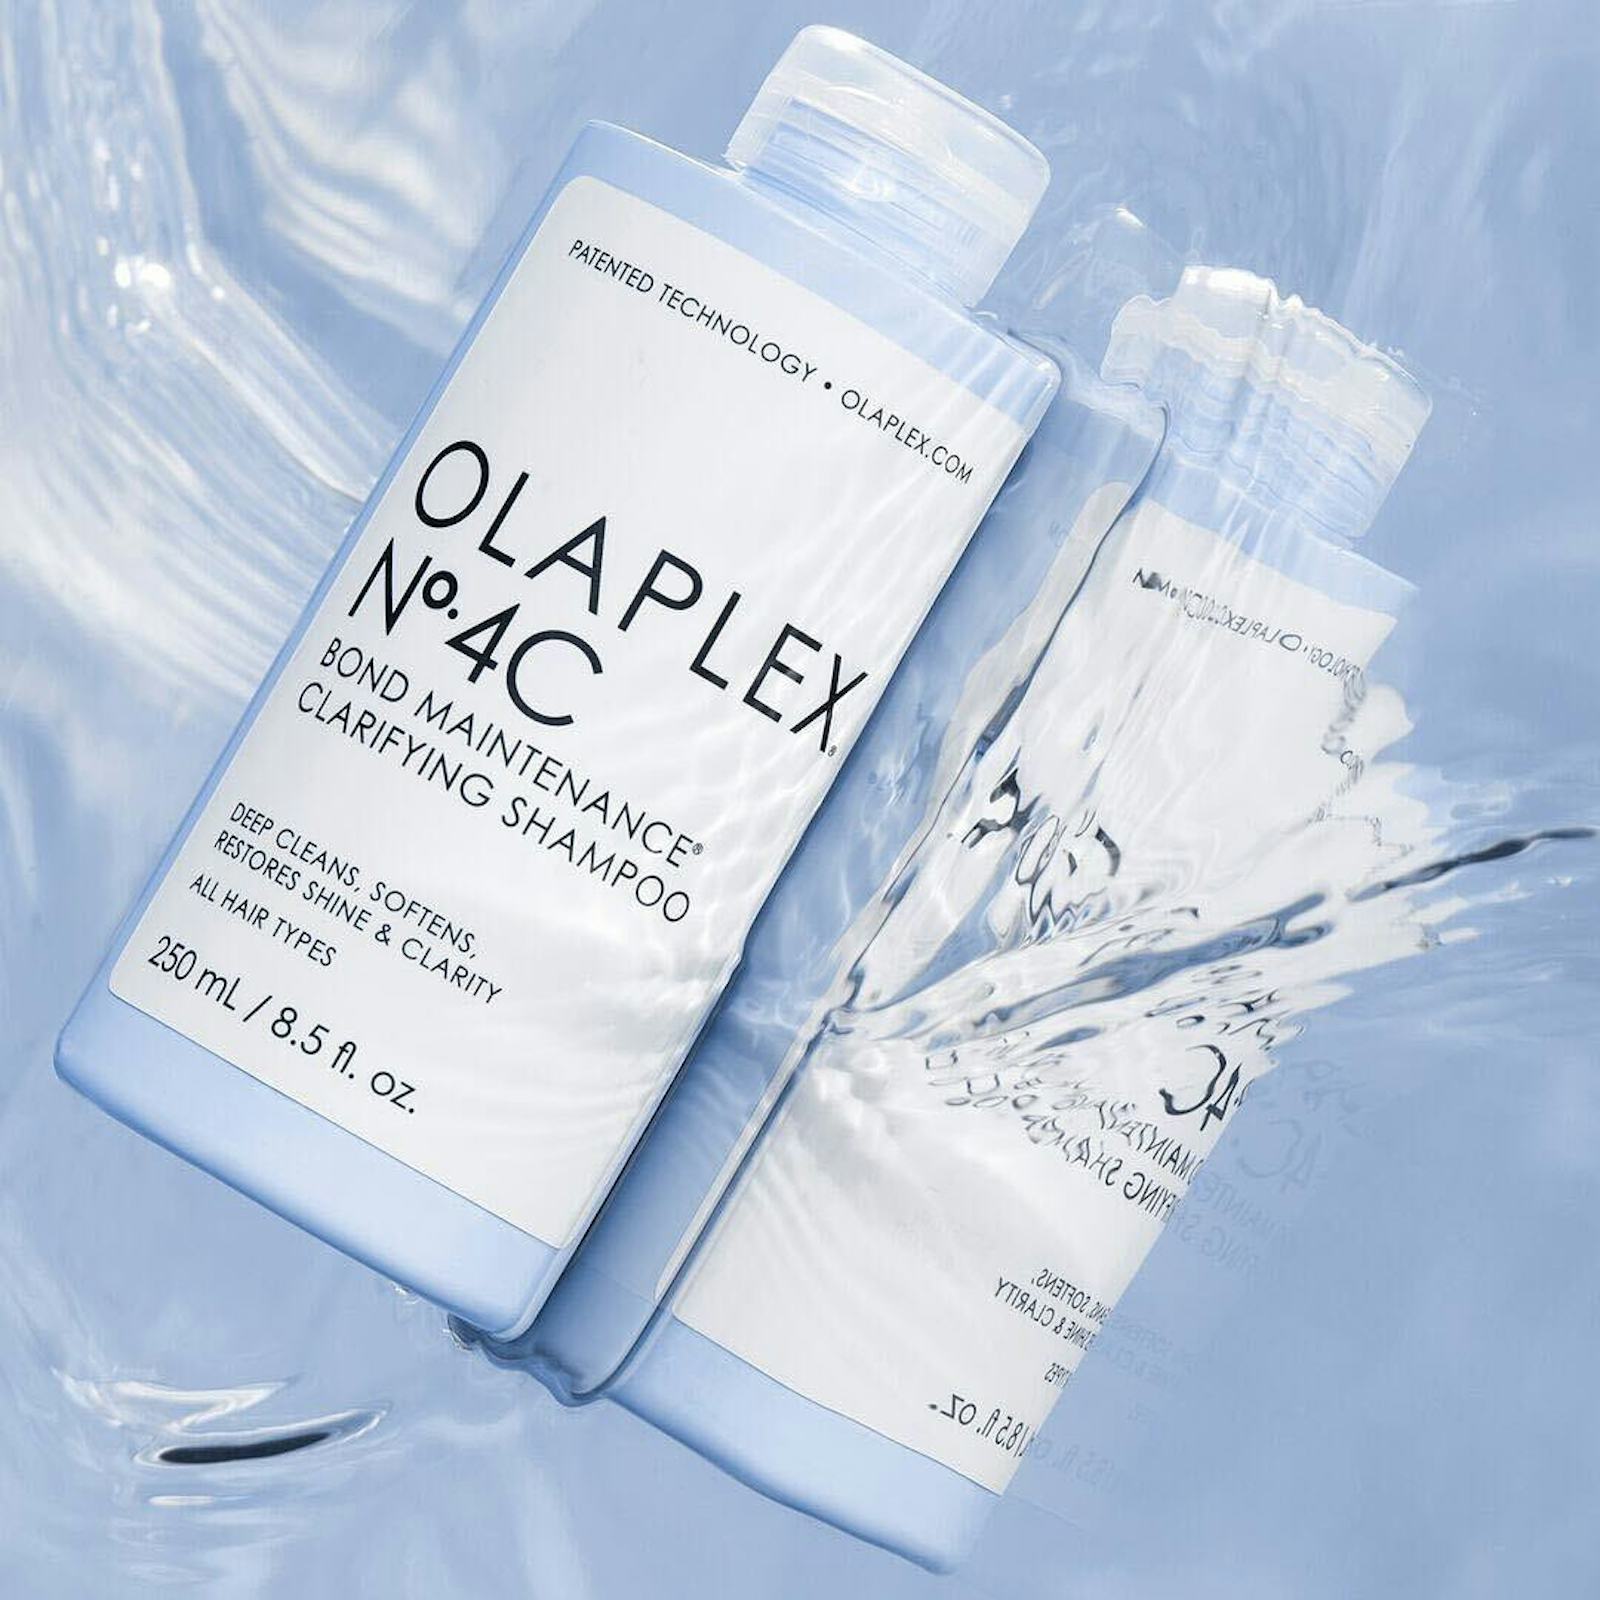 Olaplex Launches No. 4C Bond Maintenance Clarifying Shampoo